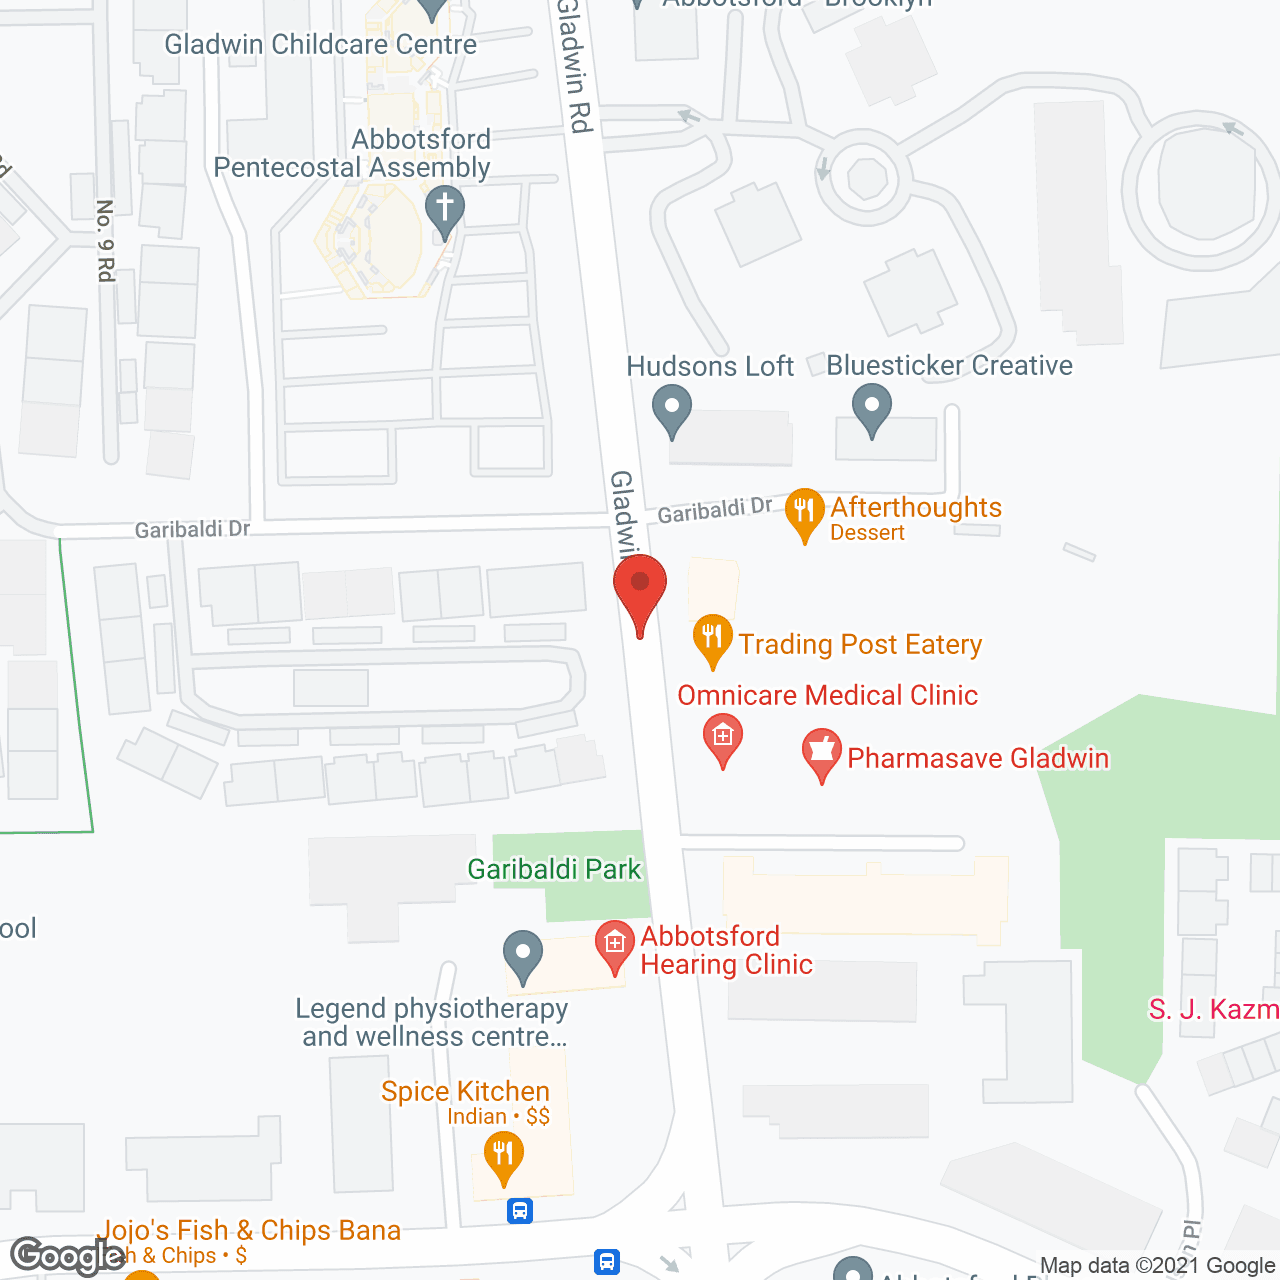 Msa Manor in google map